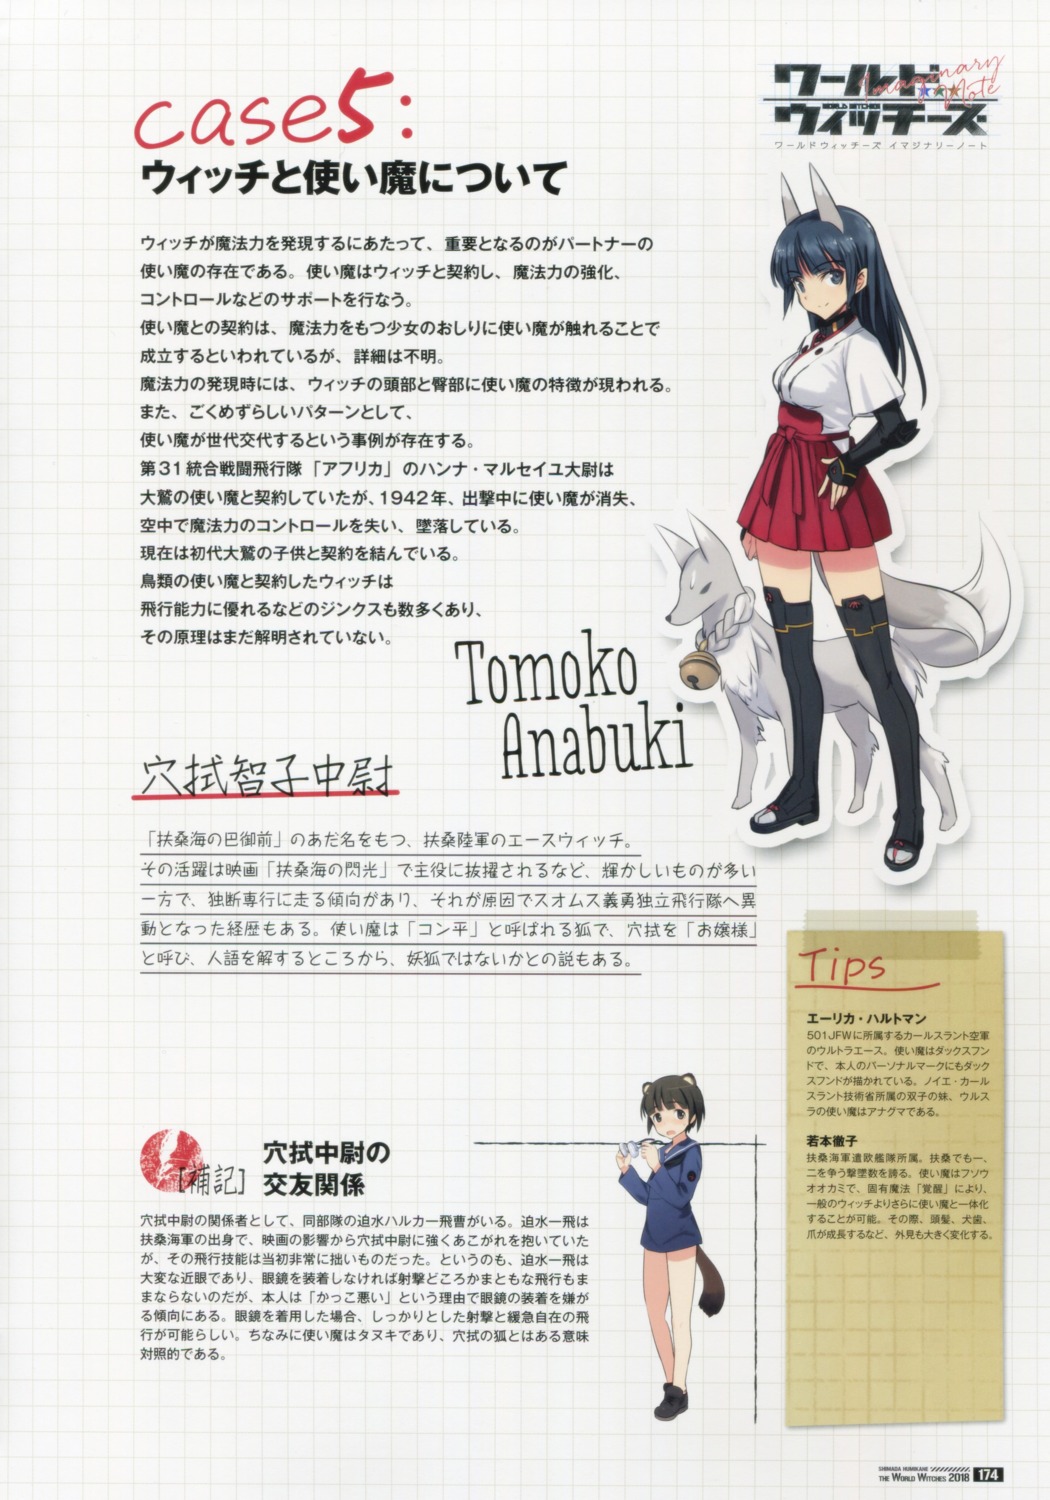 Shimada Humikane Strike Witches Anabuki Tomoko Sakomizu Haruka Animal Ears Miko Tail Thighhighs Yande Re